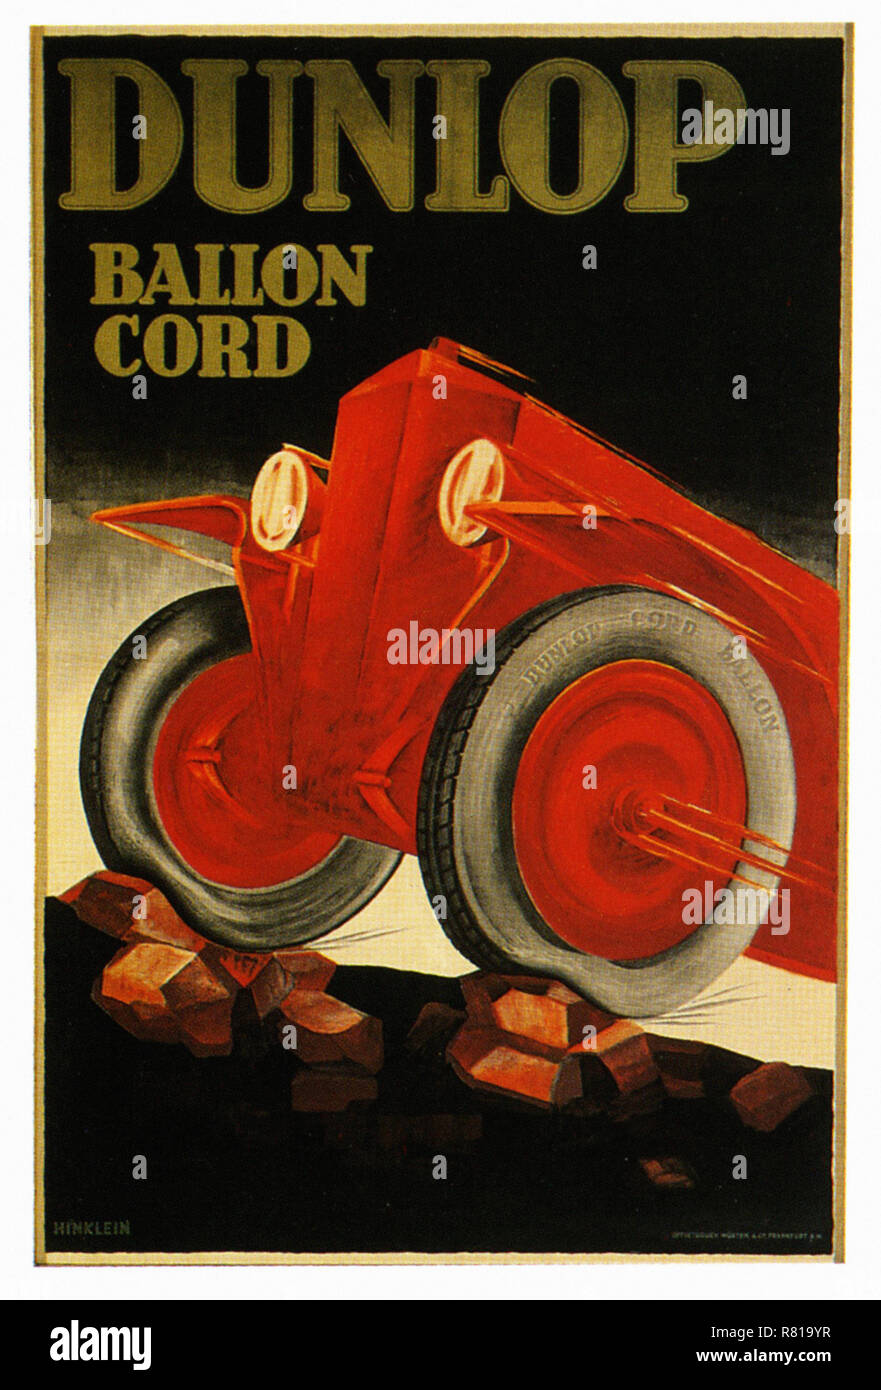 Dunlop Ballon Cords - Vintage car's advertising poster Stock Photo - Alamy